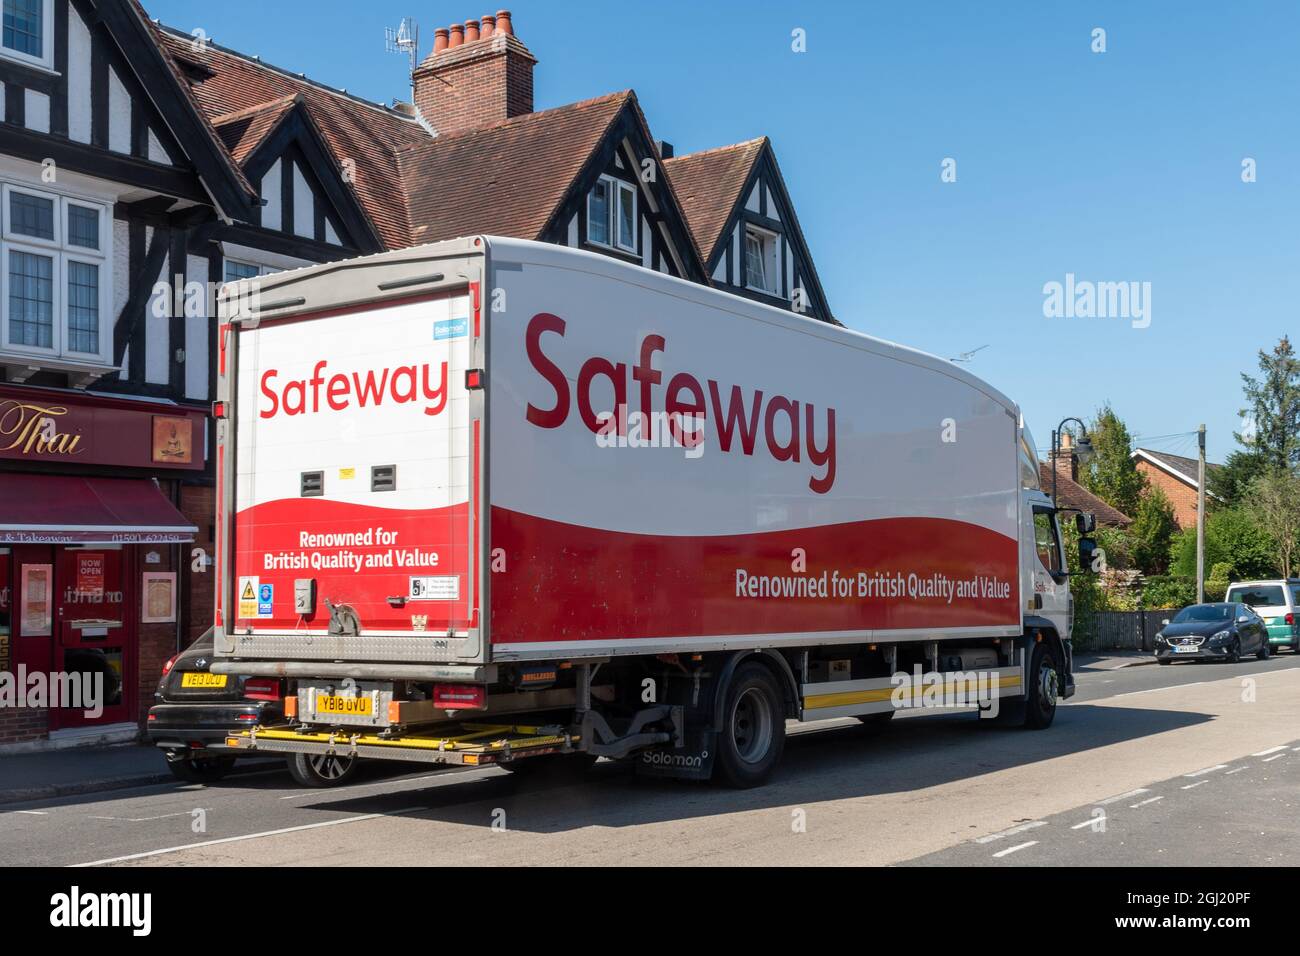 Safeway lorry or truck driving through Brockenhurst in Hampshire, England, UK Stock Photo